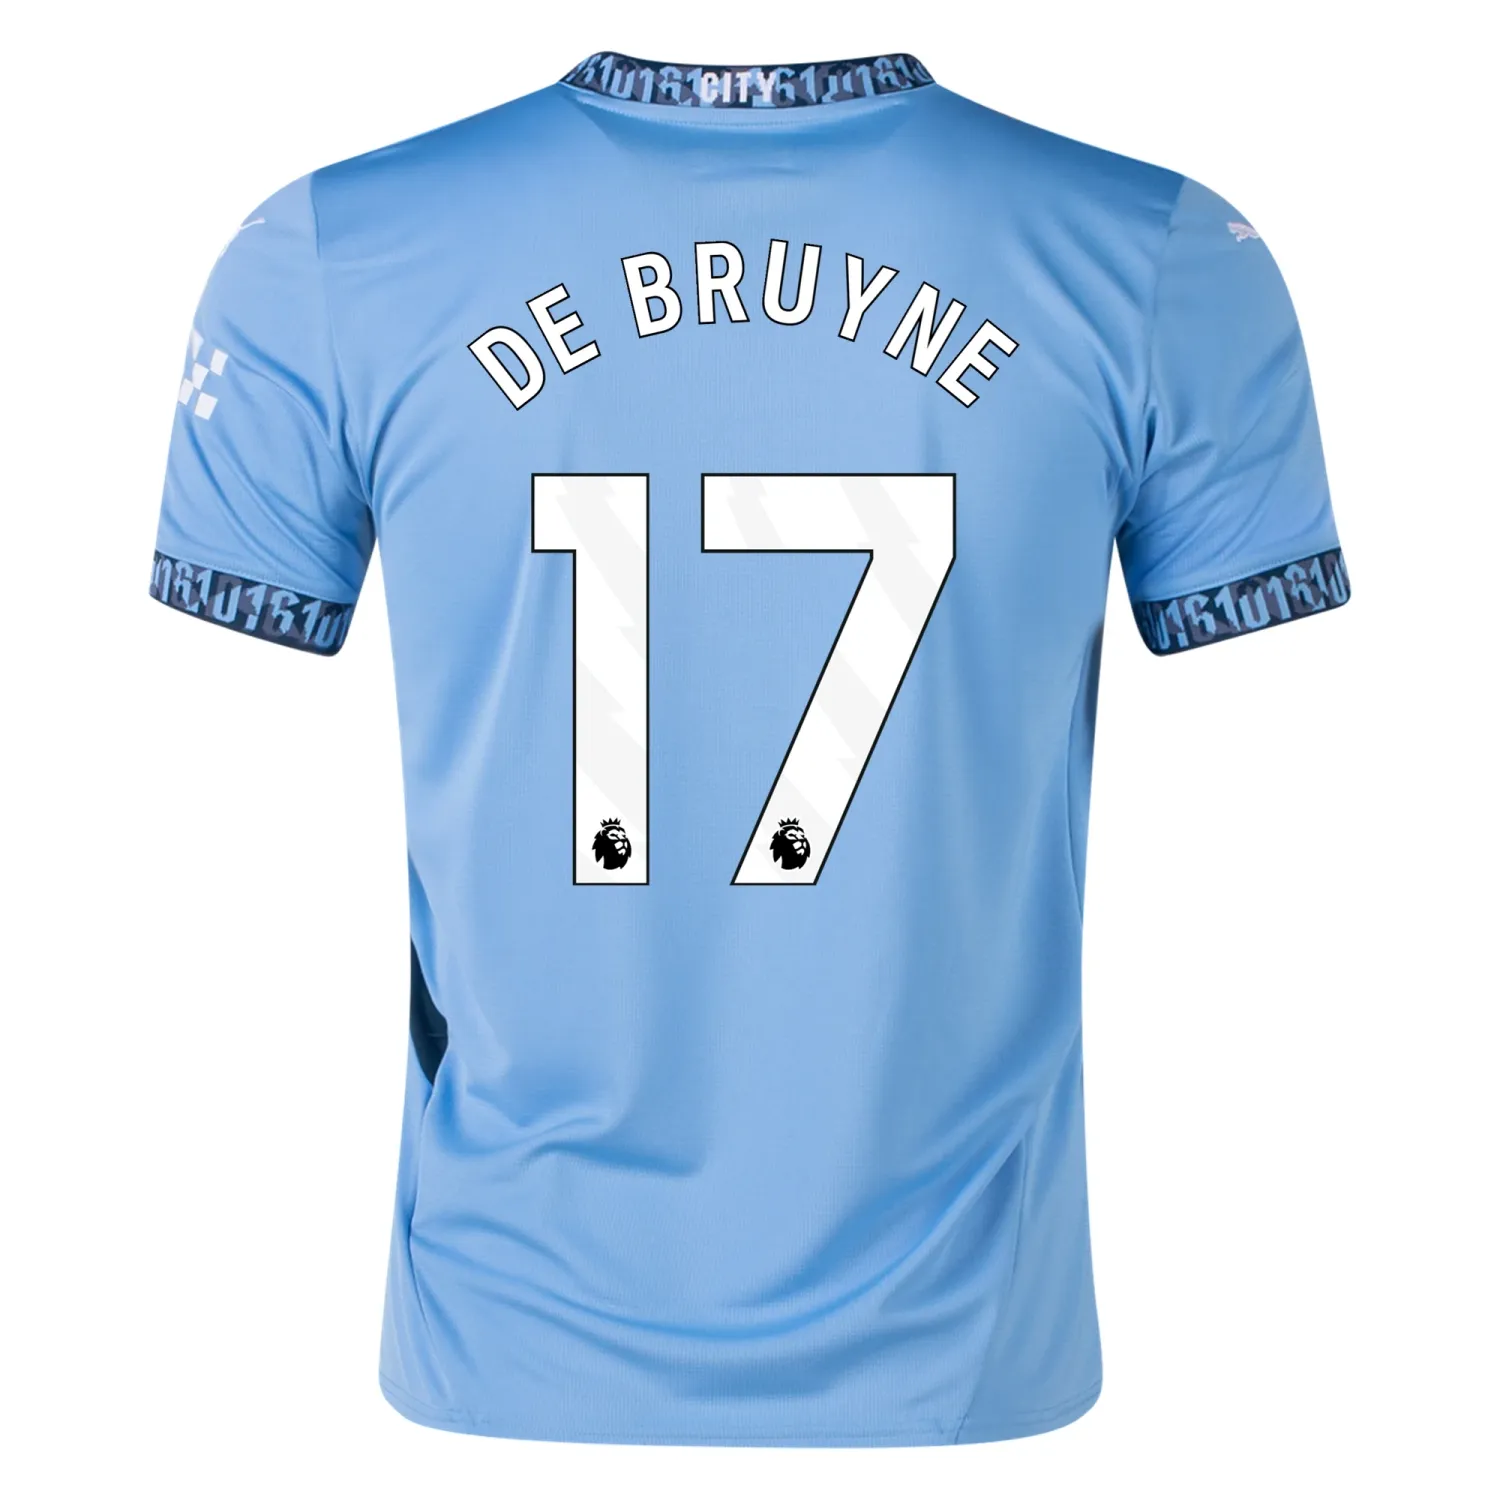 De Bruyne Manchester City Home Soccer Jersey 24-25